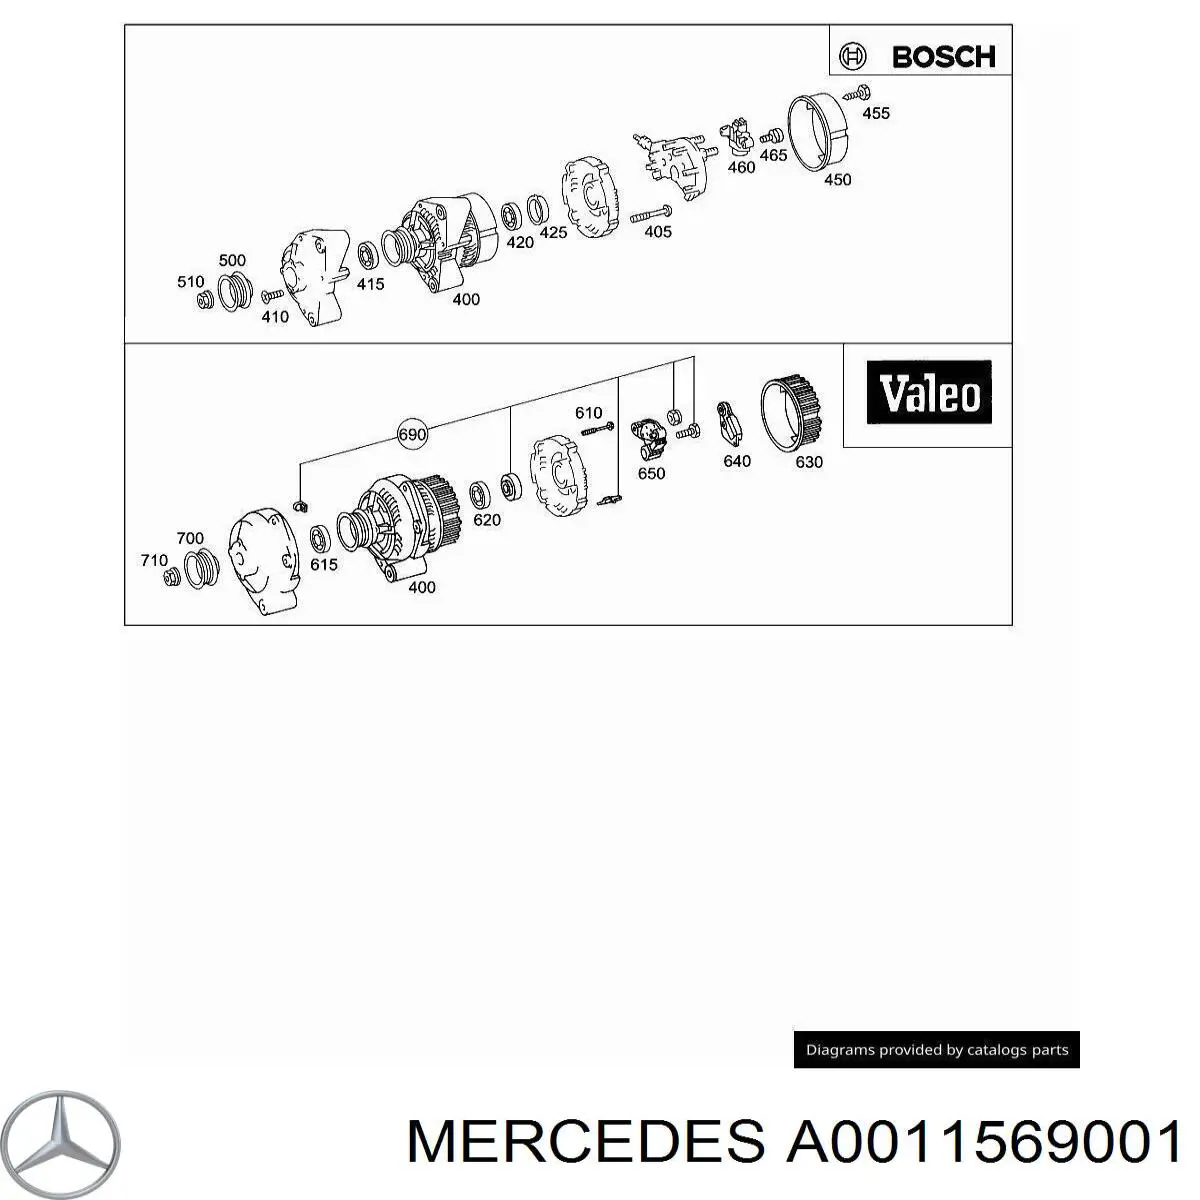 A0011569001 Mercedes terminal do gerador